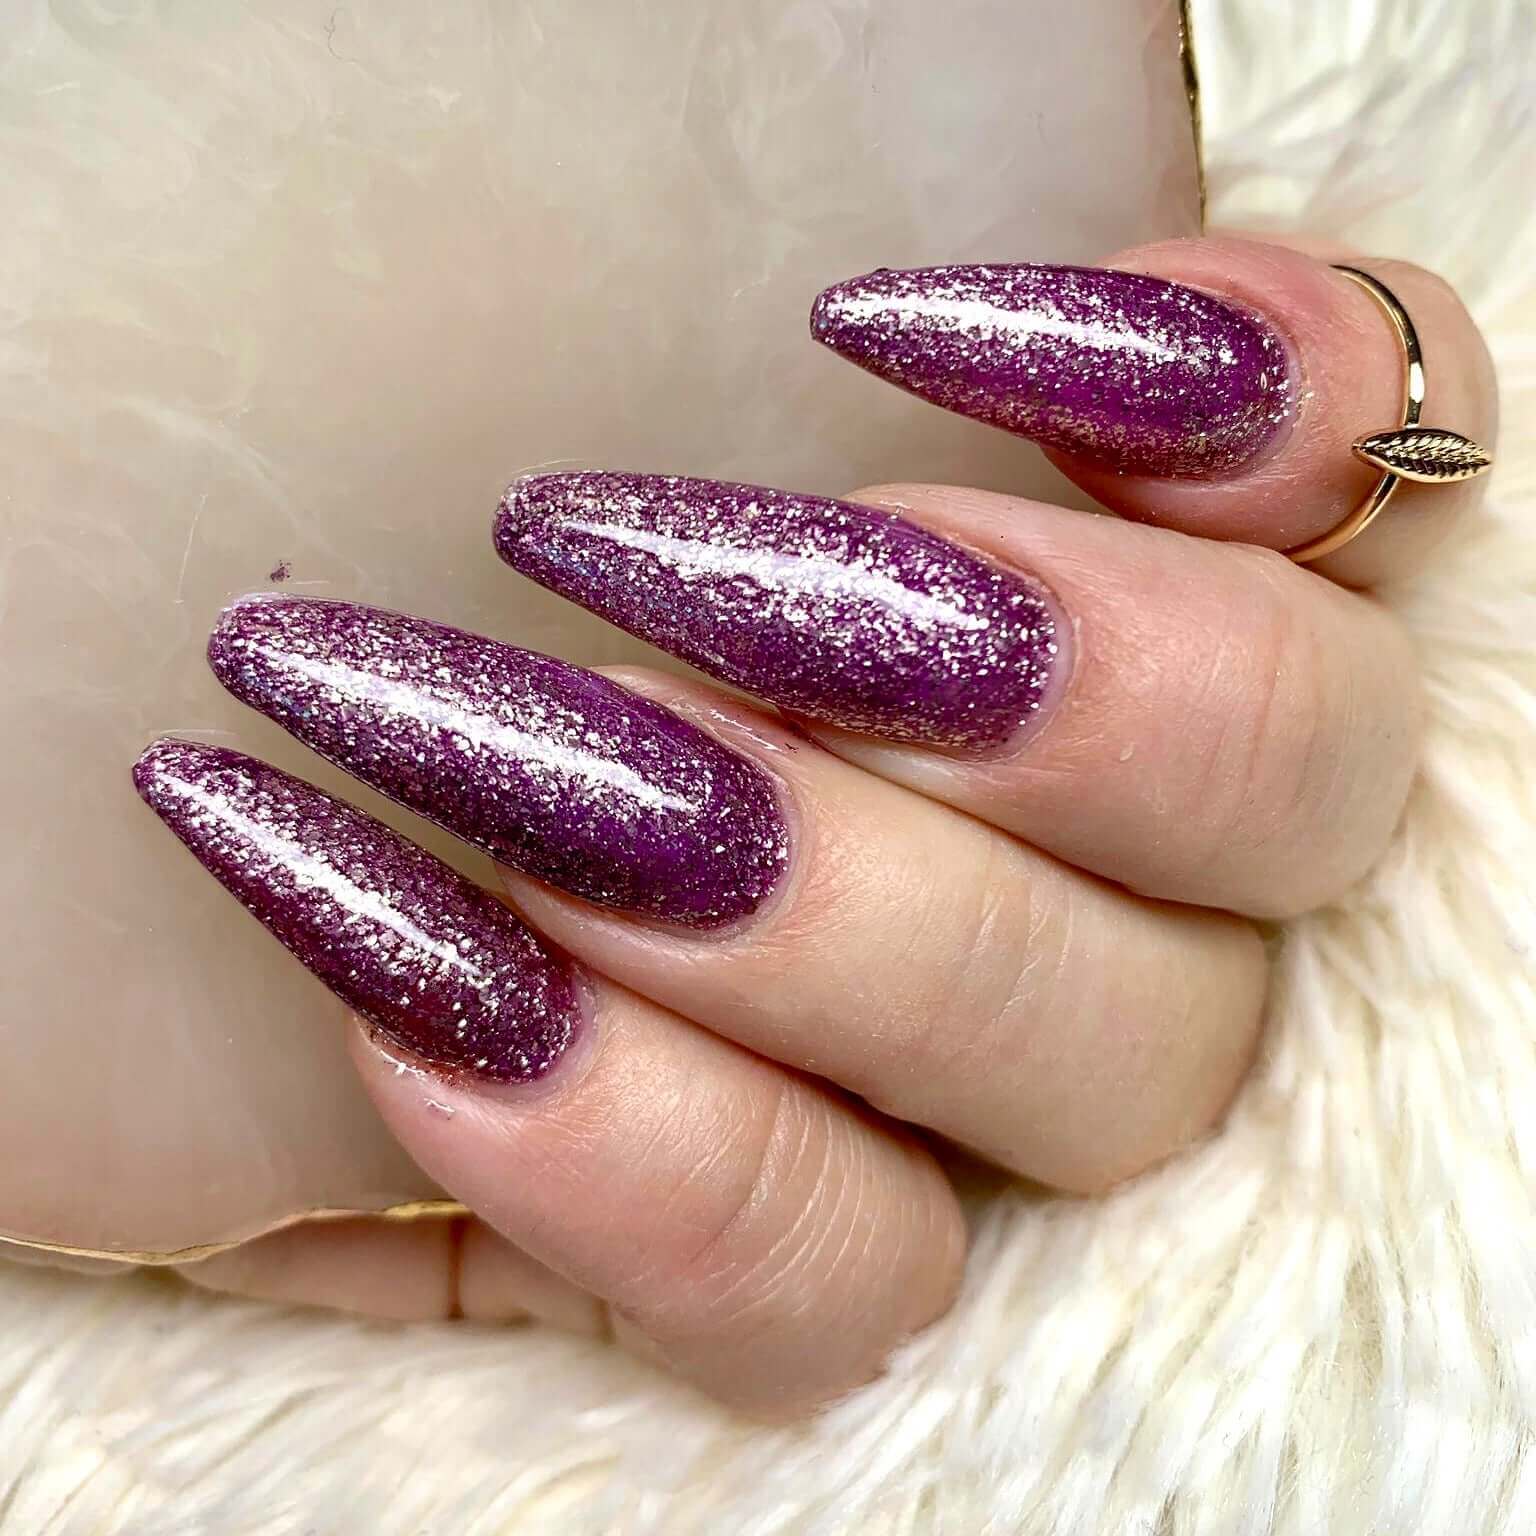 NAILINO Glitter Gel Shiny Sweet Lilac -